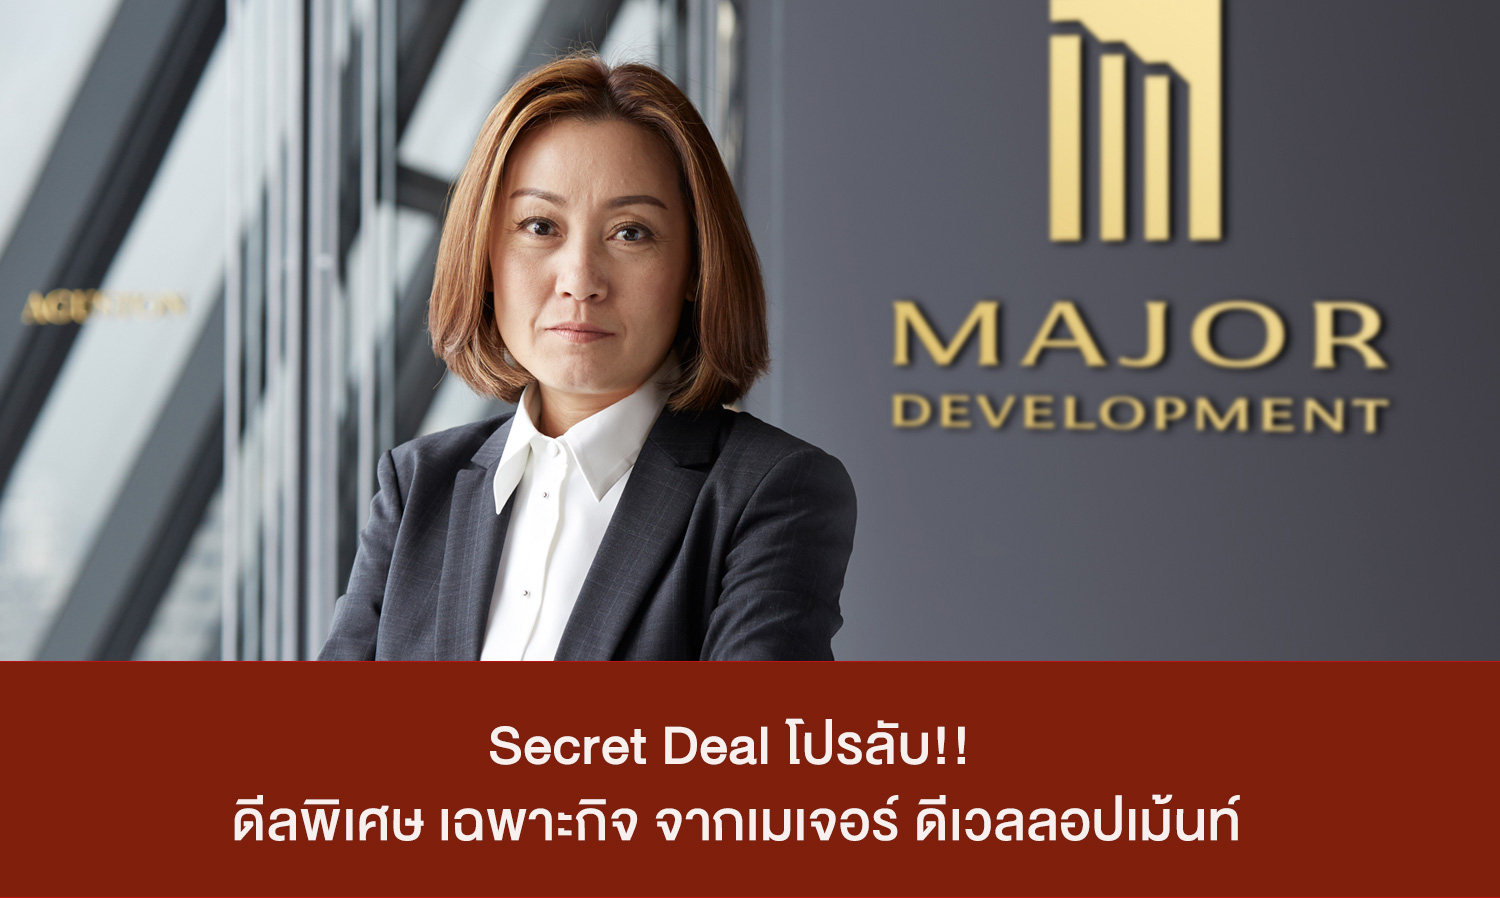 Secret Deal โปรลับ!! ดีลพิเศษ เฉพาะกิจ จากเมเจอร์ ดีเวลลอปเม้นท์